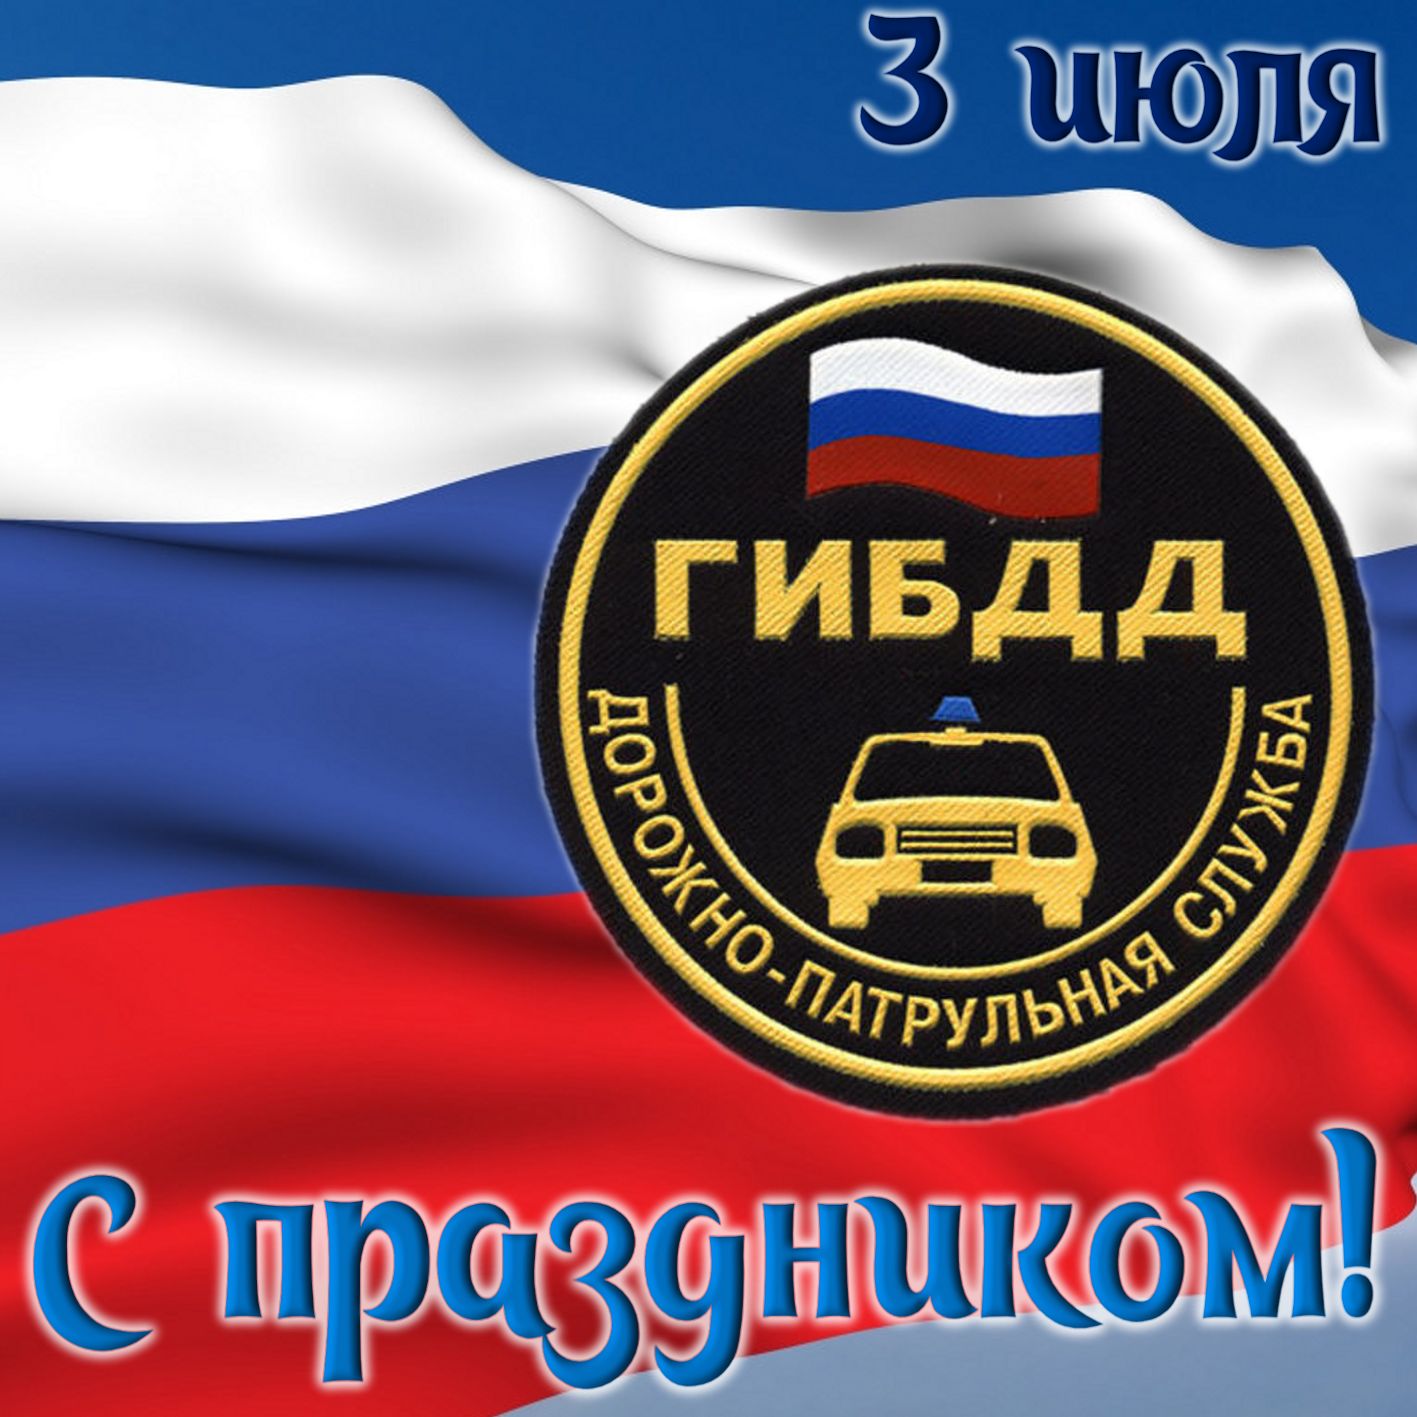 Символ ГИБДД на фоне Российского флага